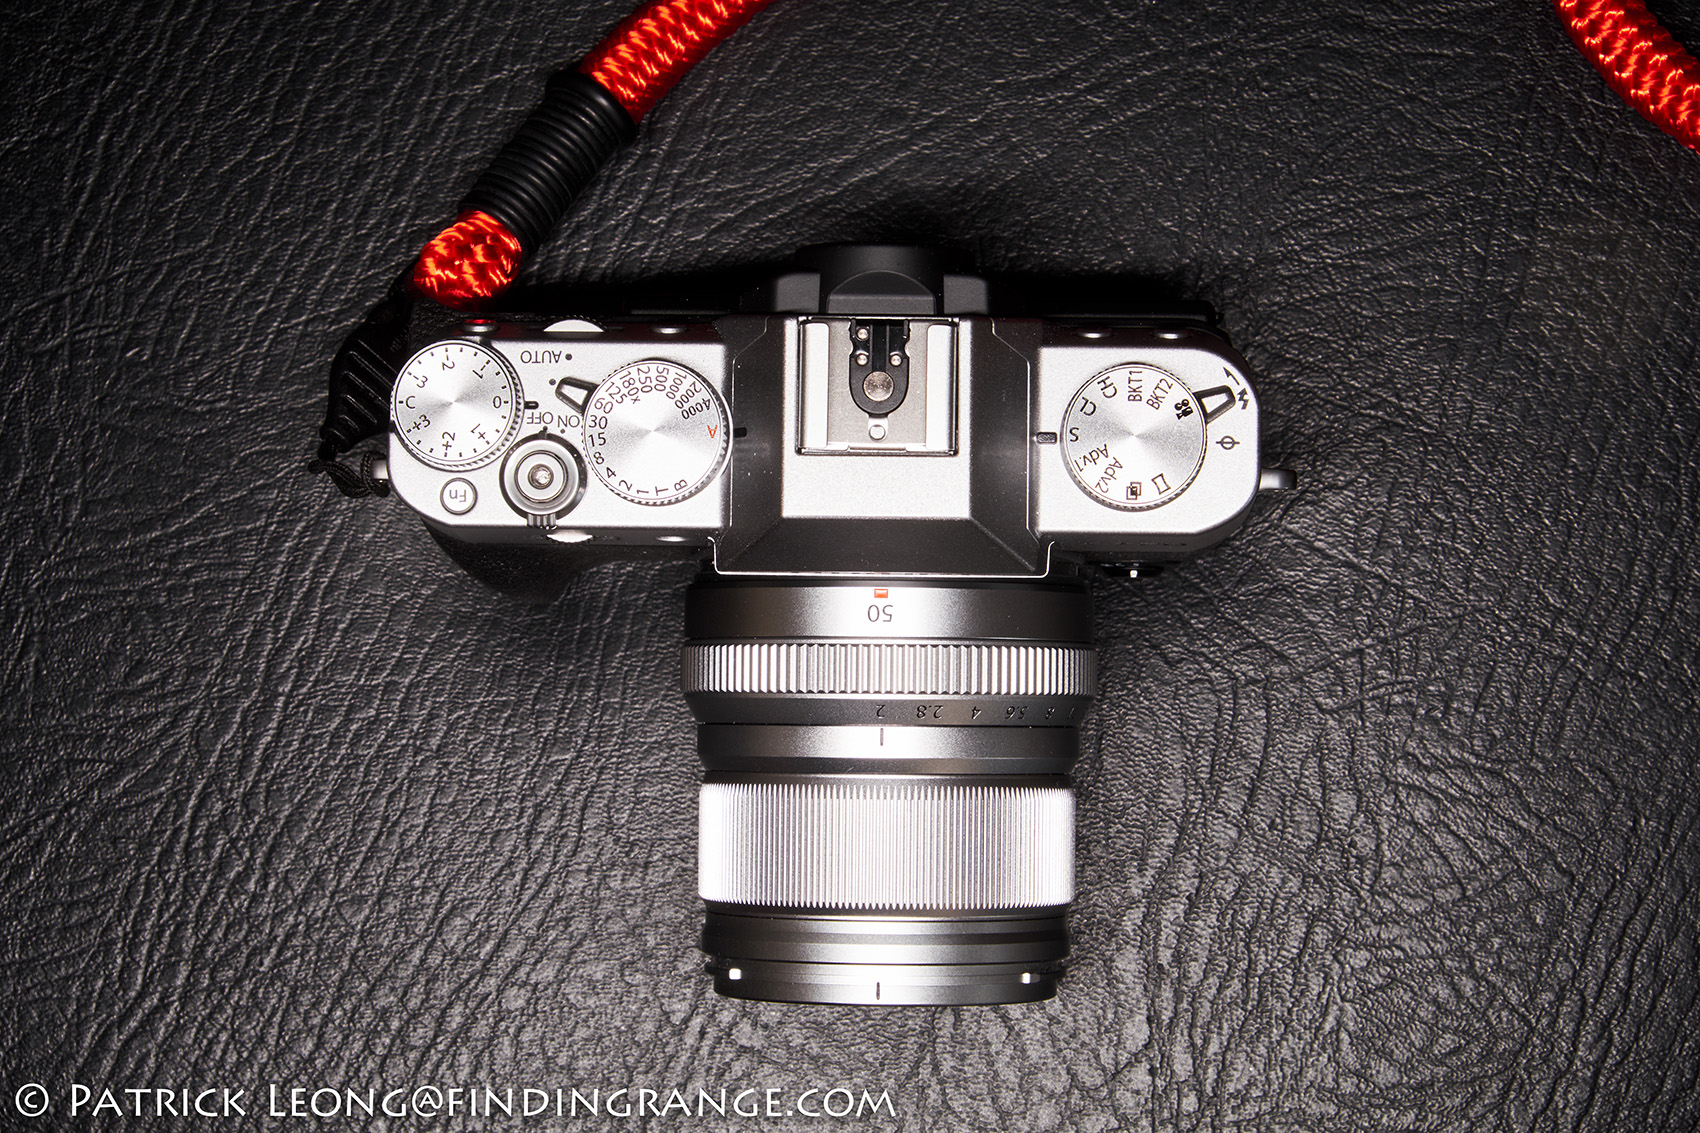 X-T20 Mirrorless Camera Review